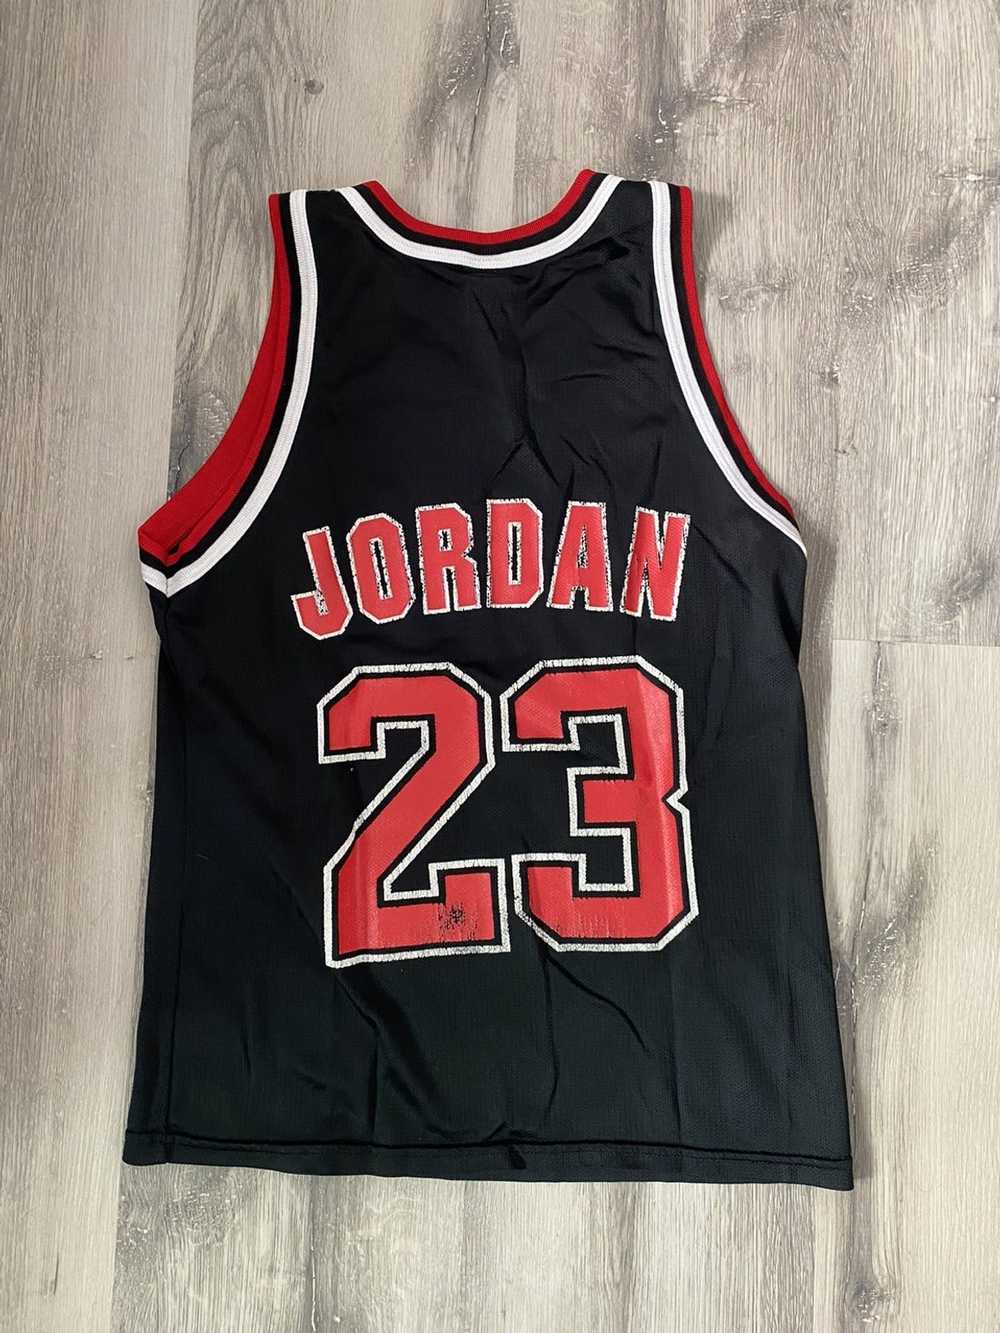 Champion Michael Jordan Jersey - image 2